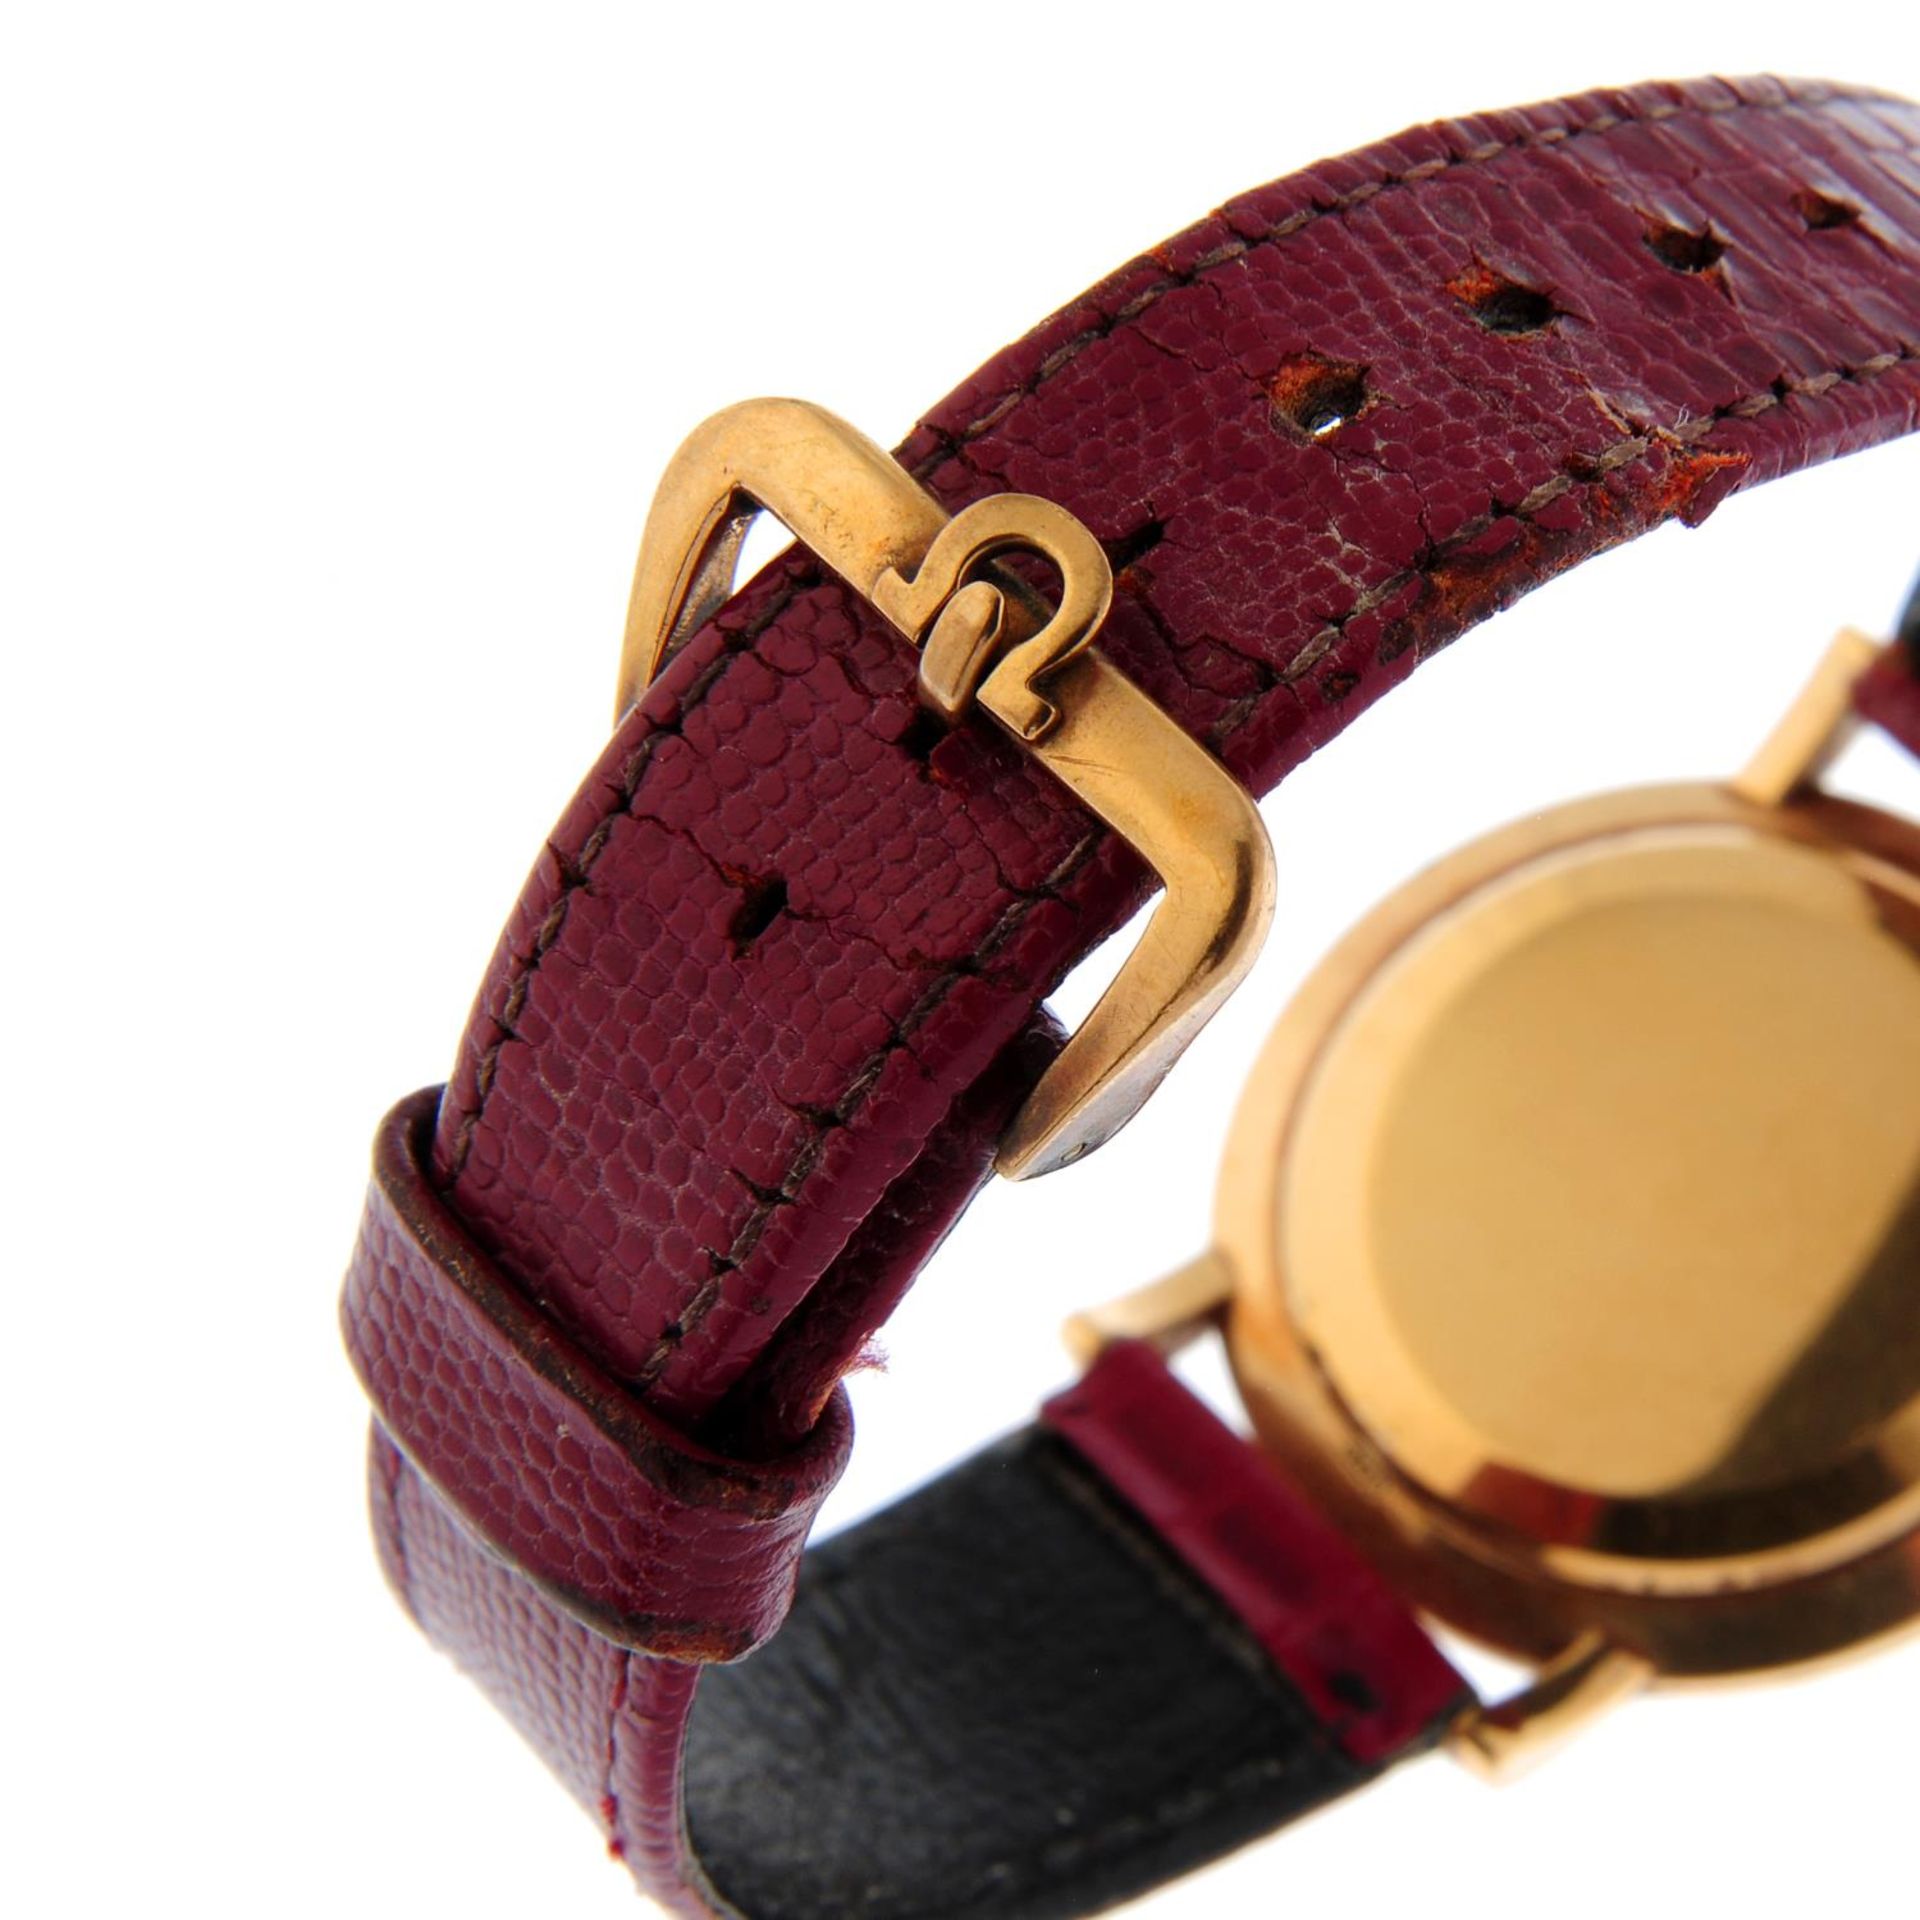 OMEGA - a wrist watch. - Image 2 of 4